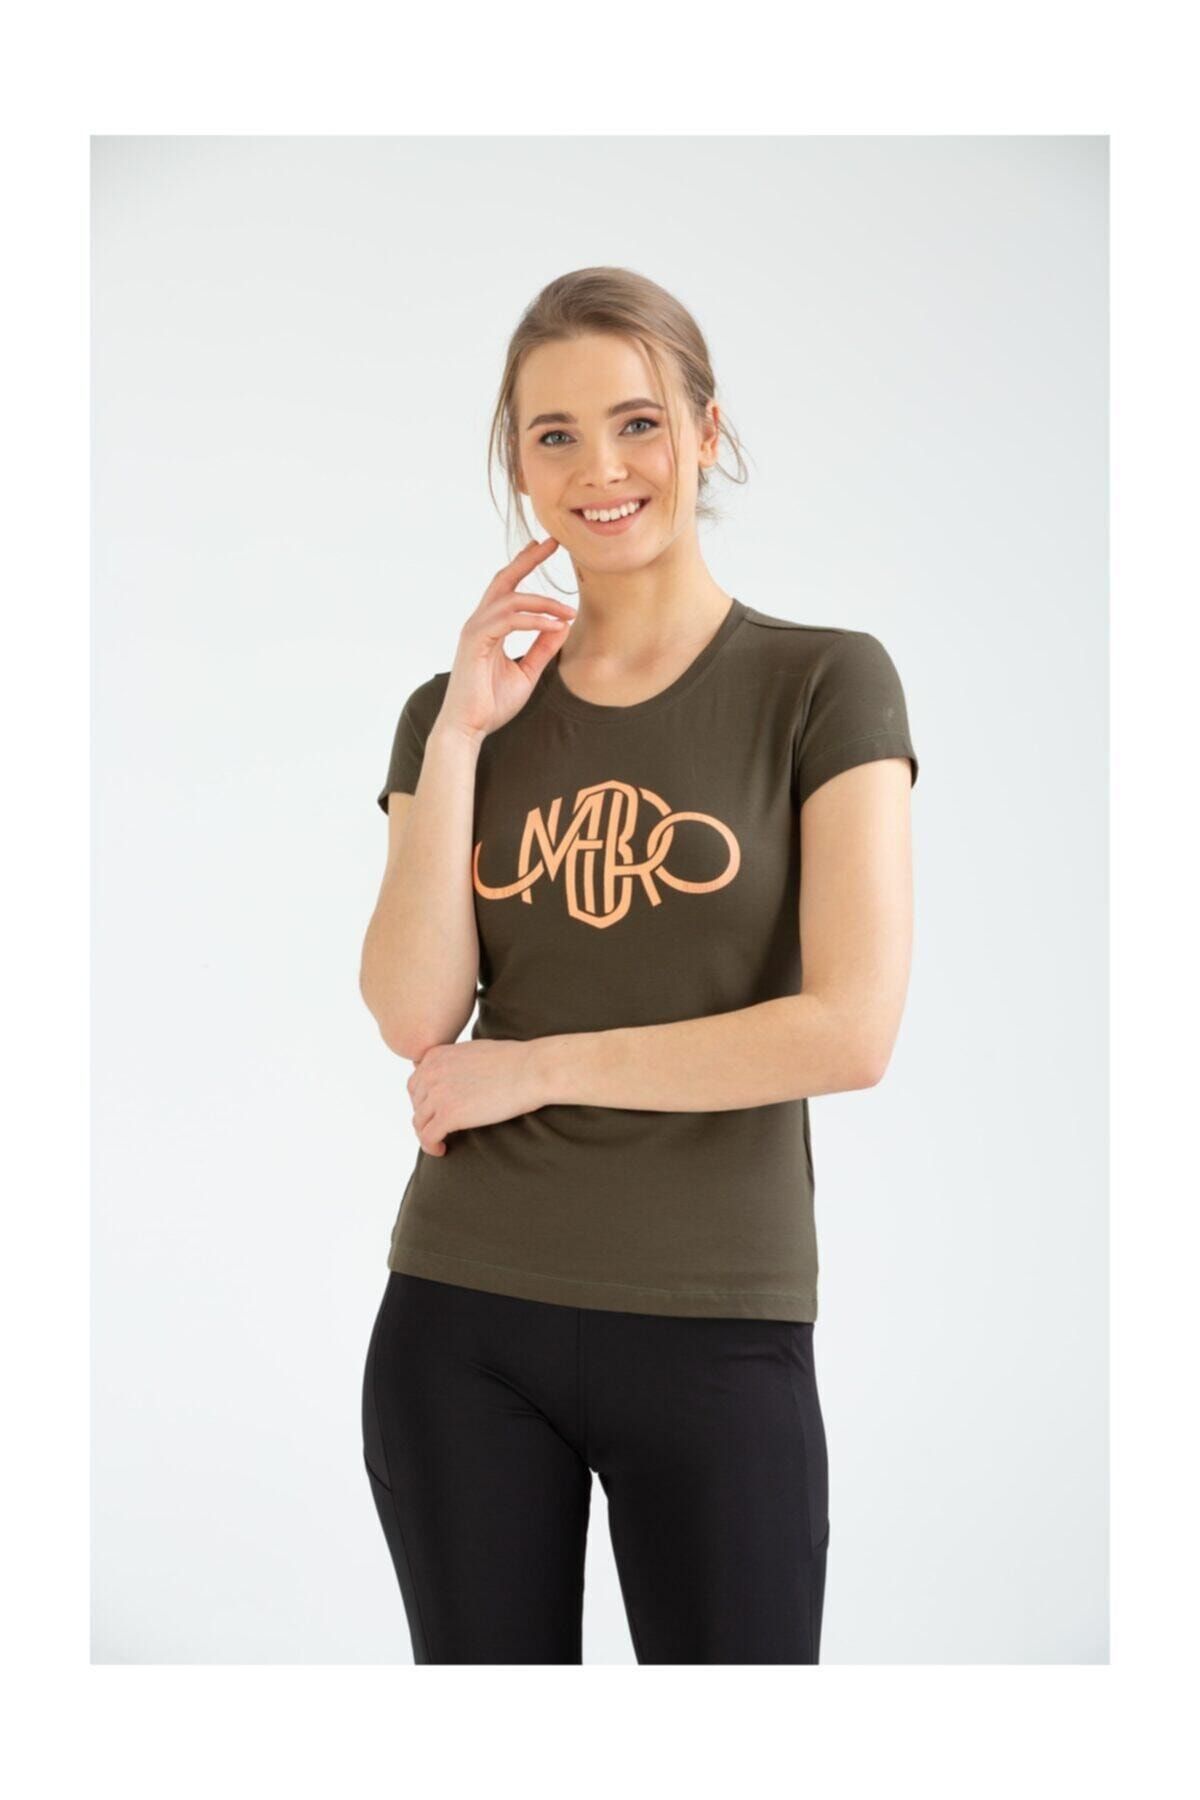 Umbro Kadın T-shirt Vf-0028 Mro Supported